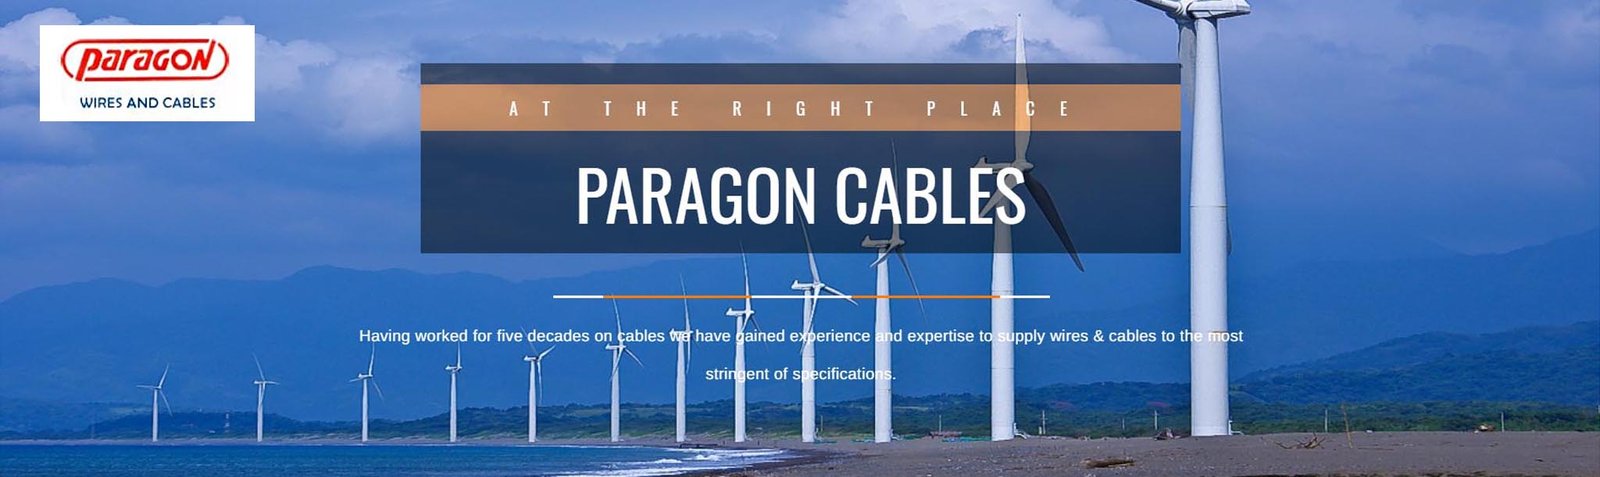 paragon cables banner